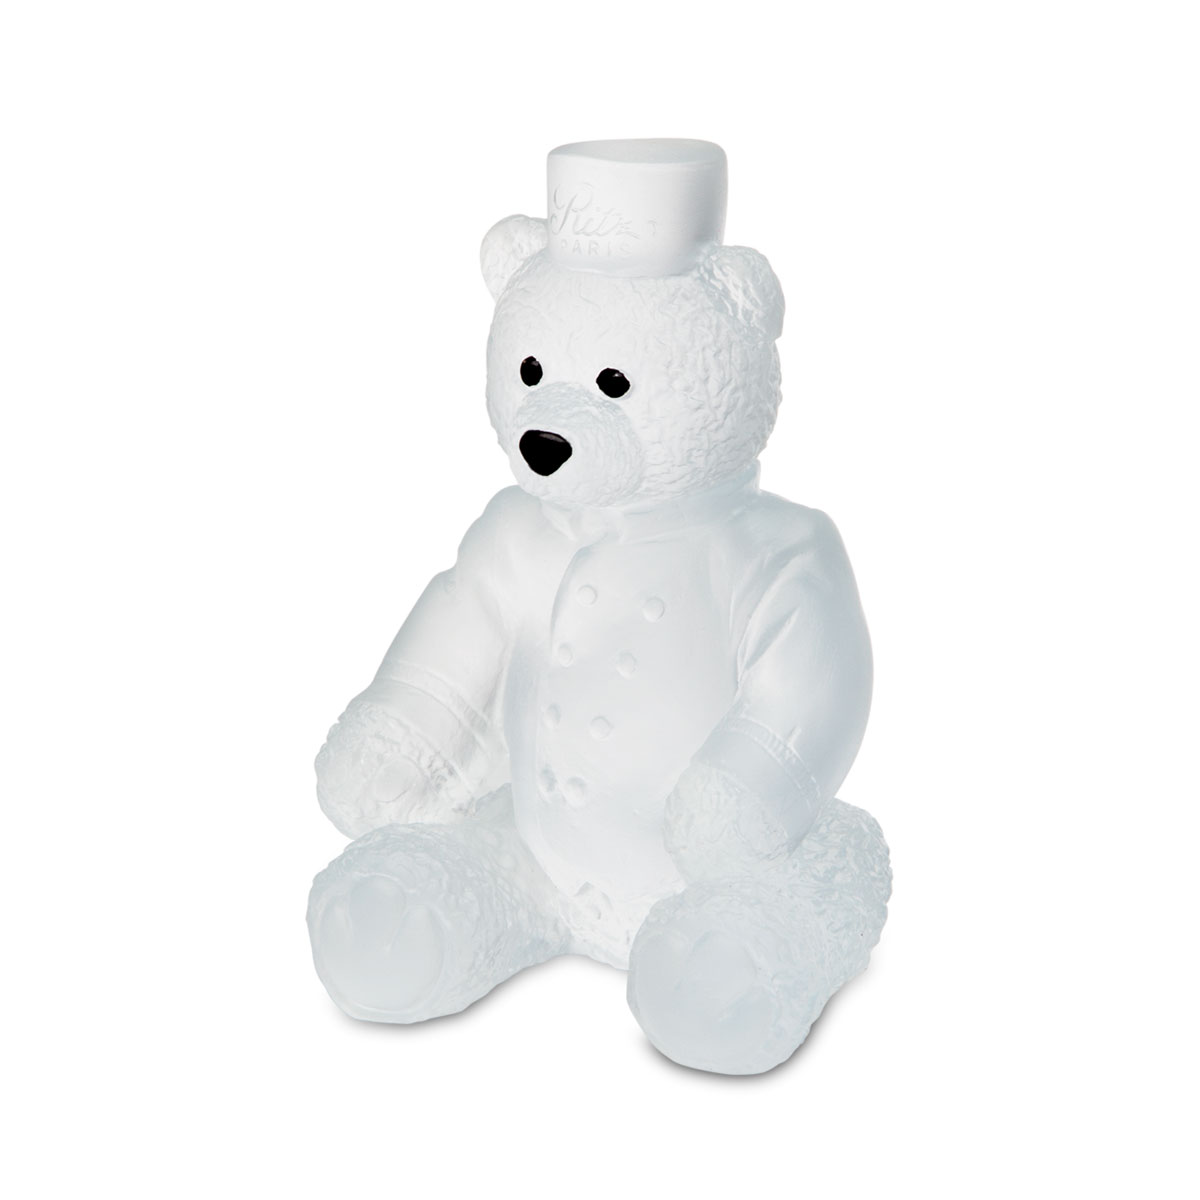 Daum Large Ritz Paris Teddy Bear in White Sculpture